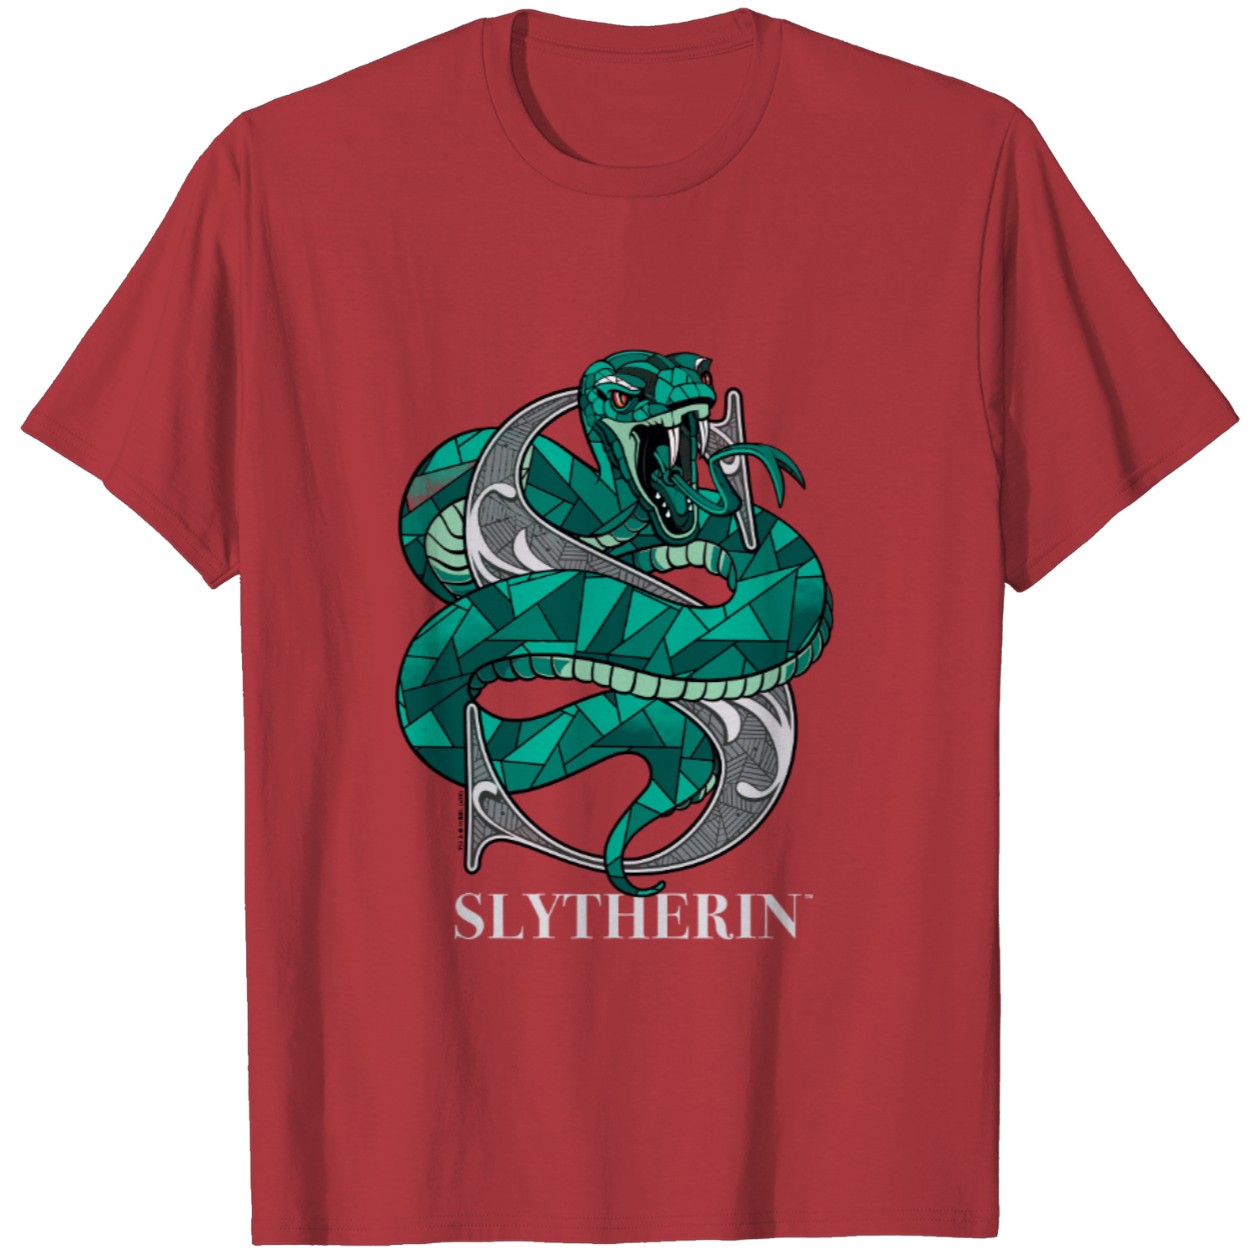 Slytherin Crosshatched Emblem Graphic Tee T-Shirt IYT